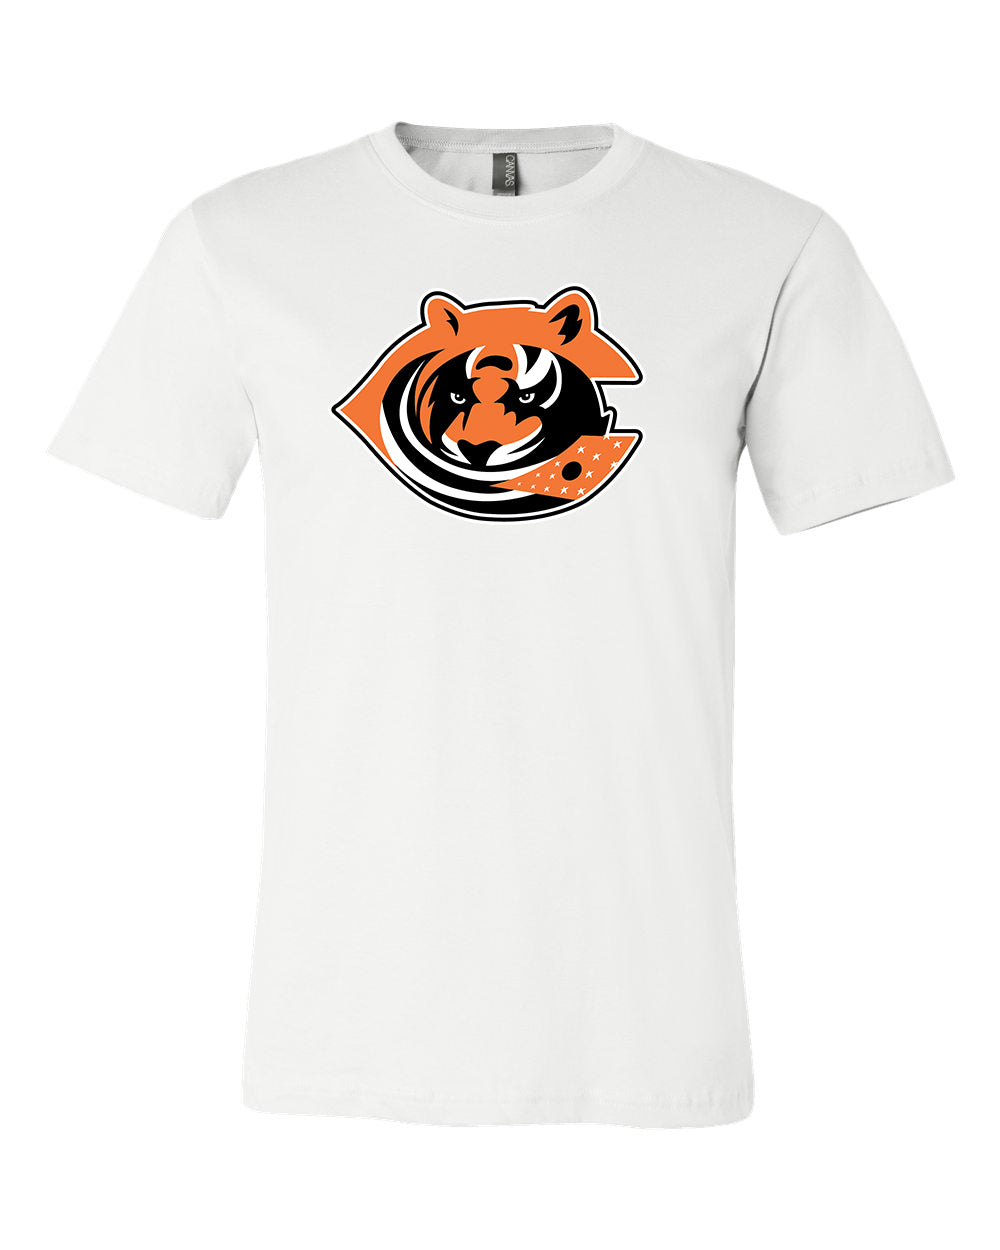 Cincinnati Reds Bengals Blue Jackets MASH UP Logo T-shirt 6 Sizes S-3X